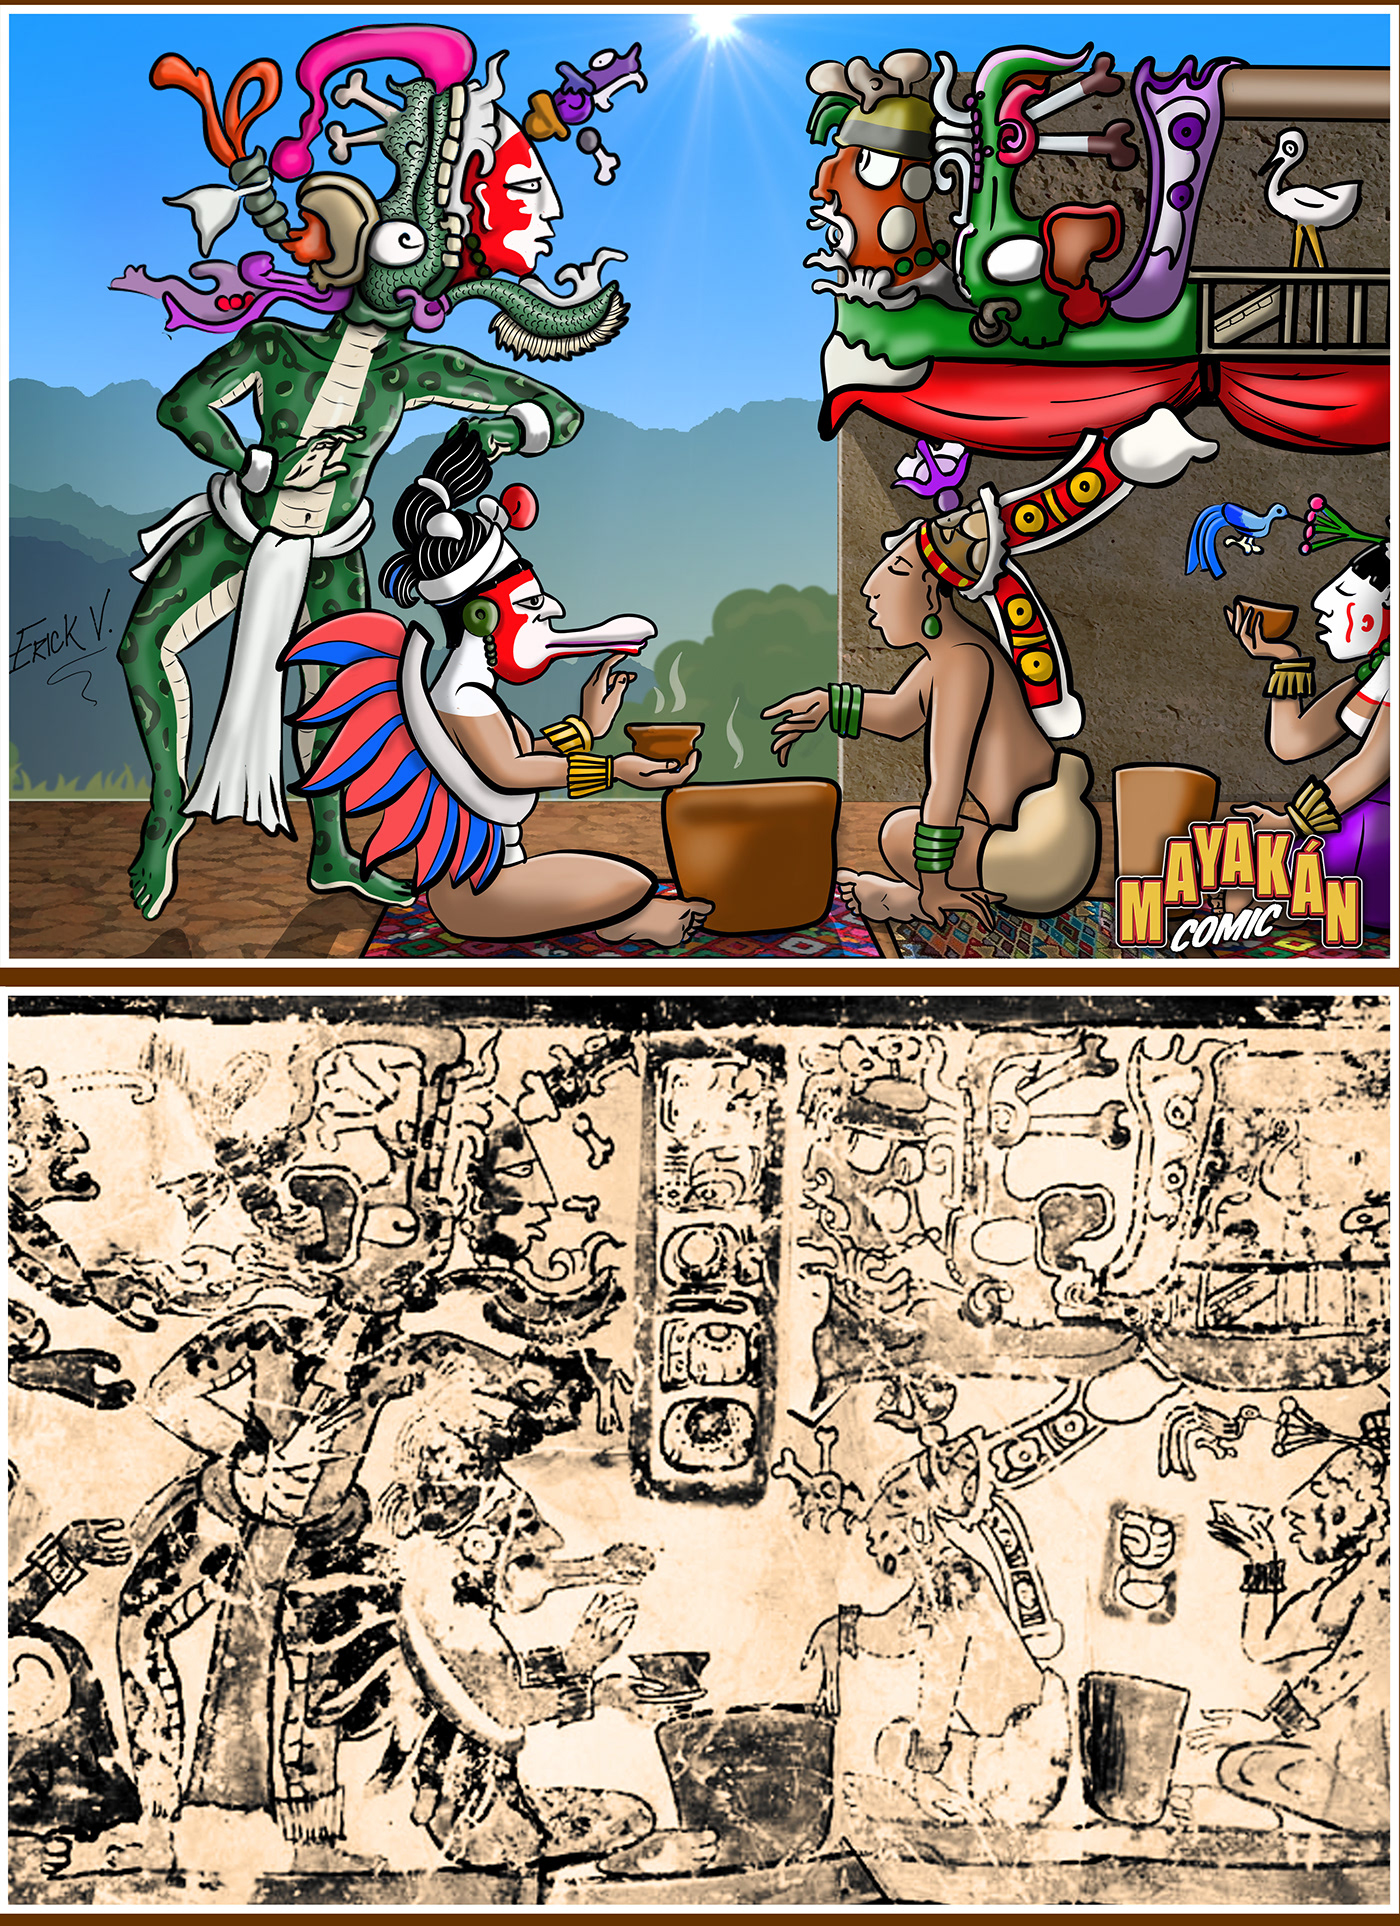 maya culture mitologia mistic Ancient Maya comic ILLUSTRATION  Drawing  digital illustration